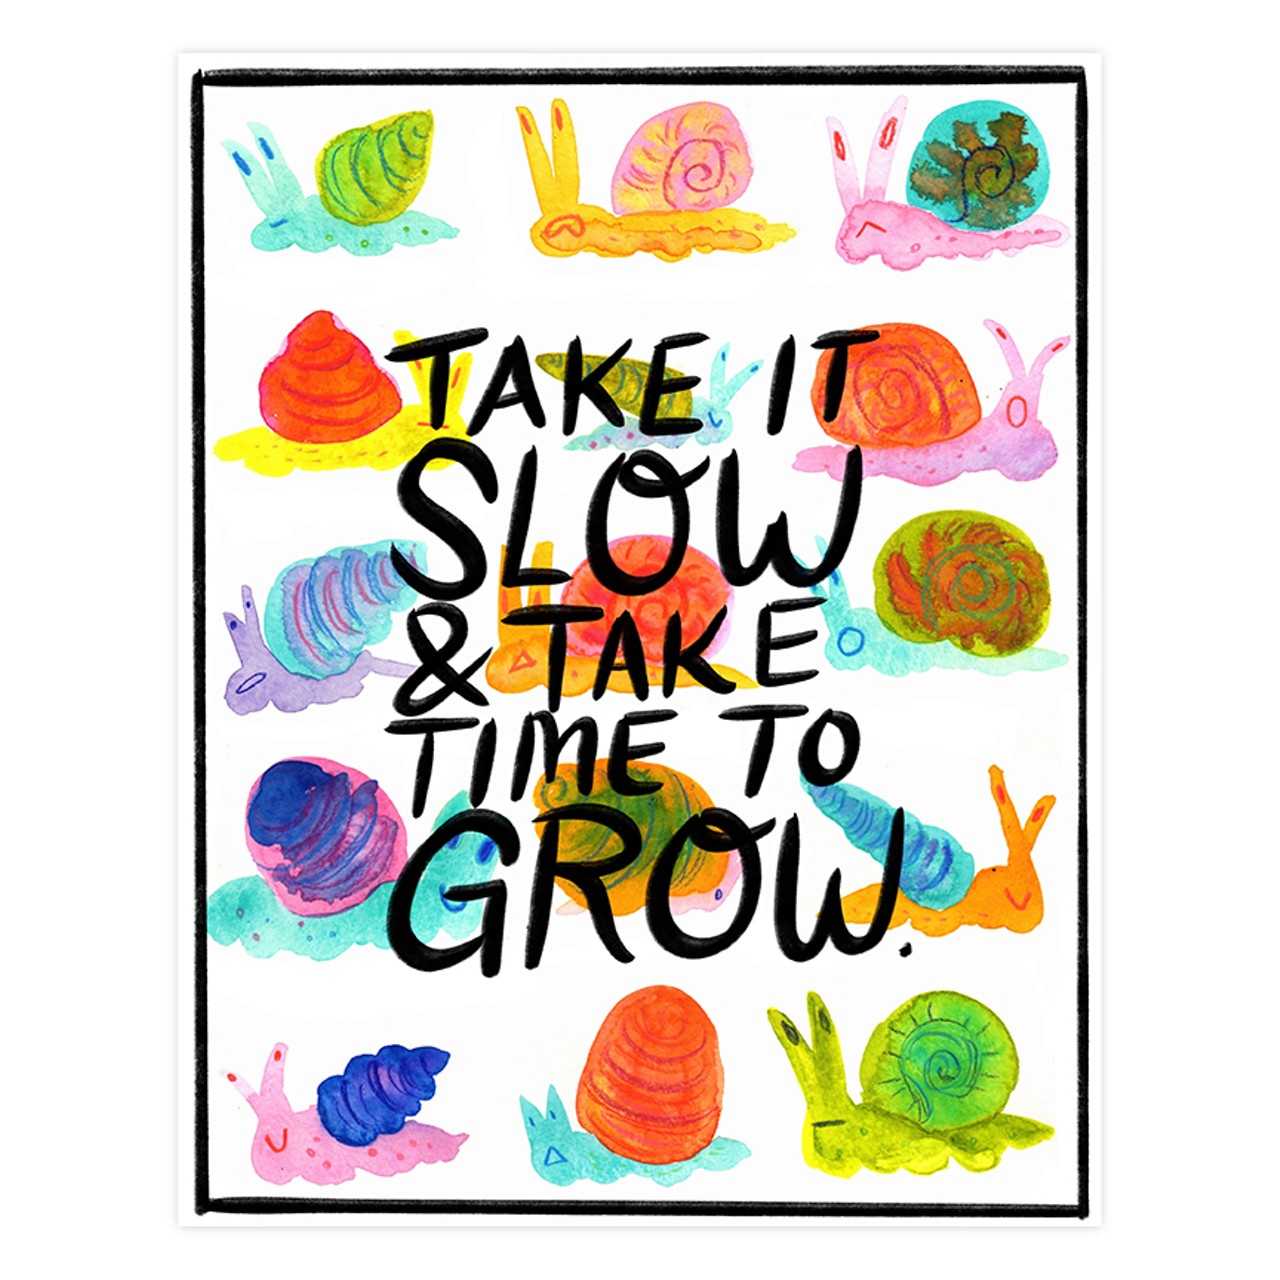 "Take It Slow" by Ashley Franklin